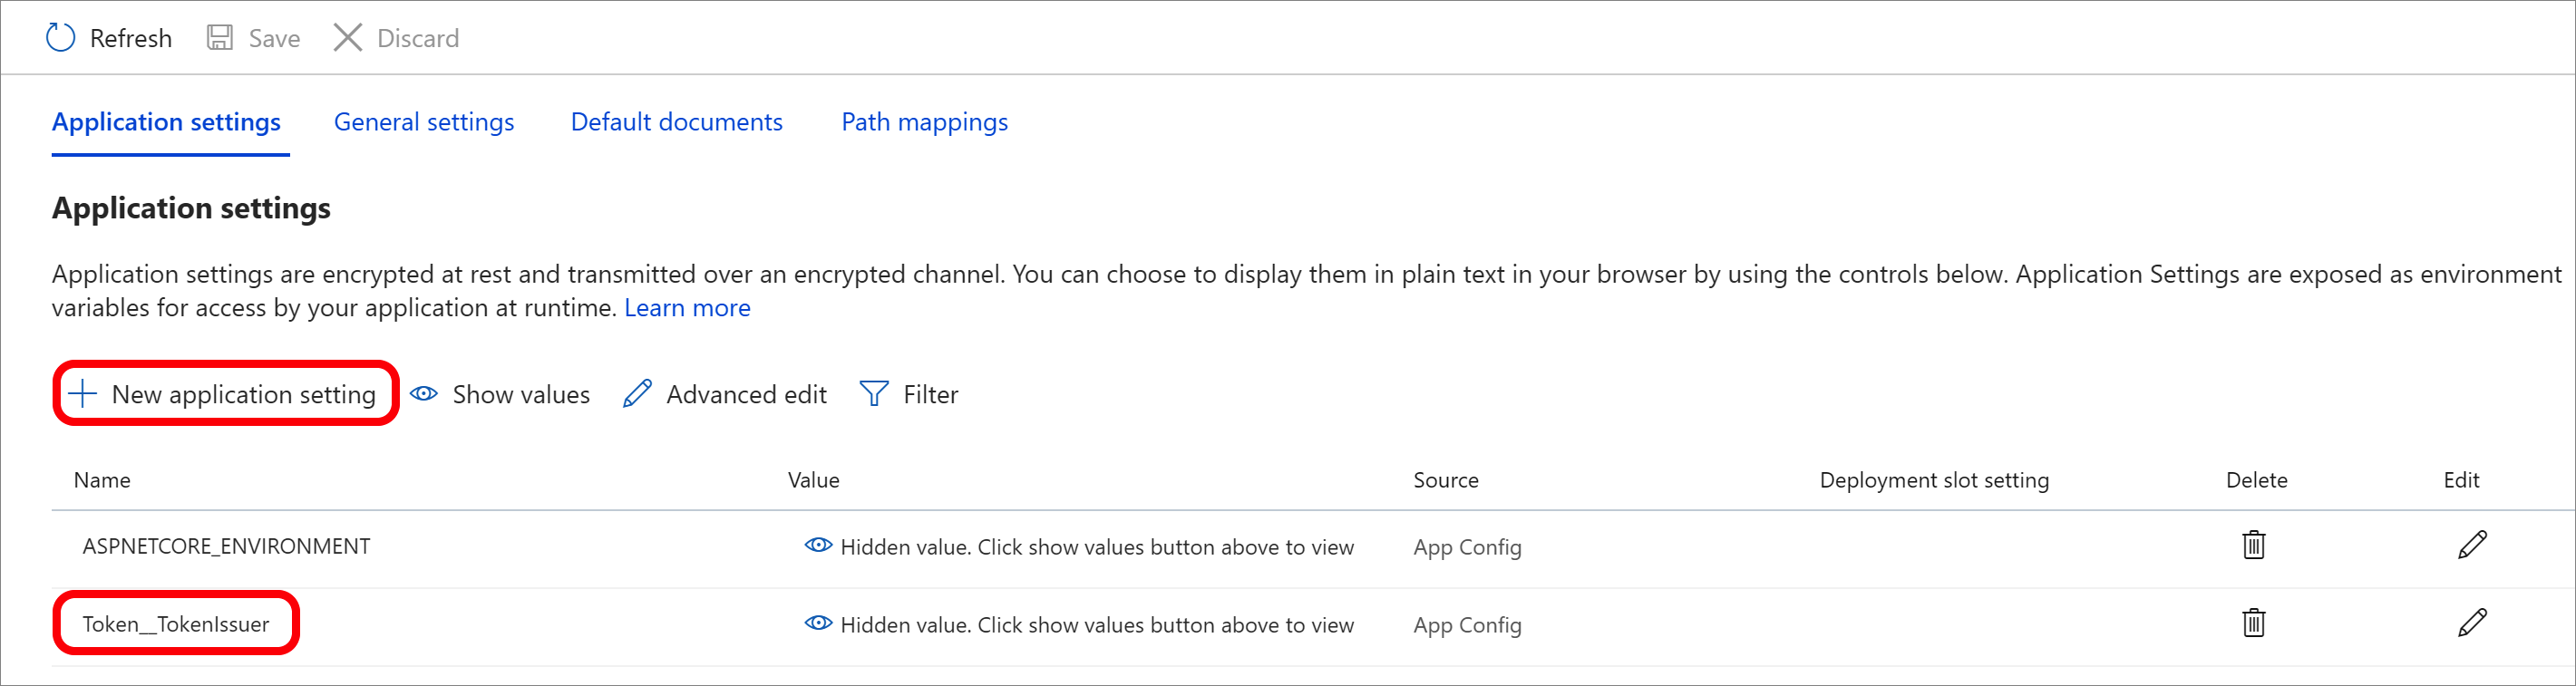 Screenshot that shows the Application settings window.